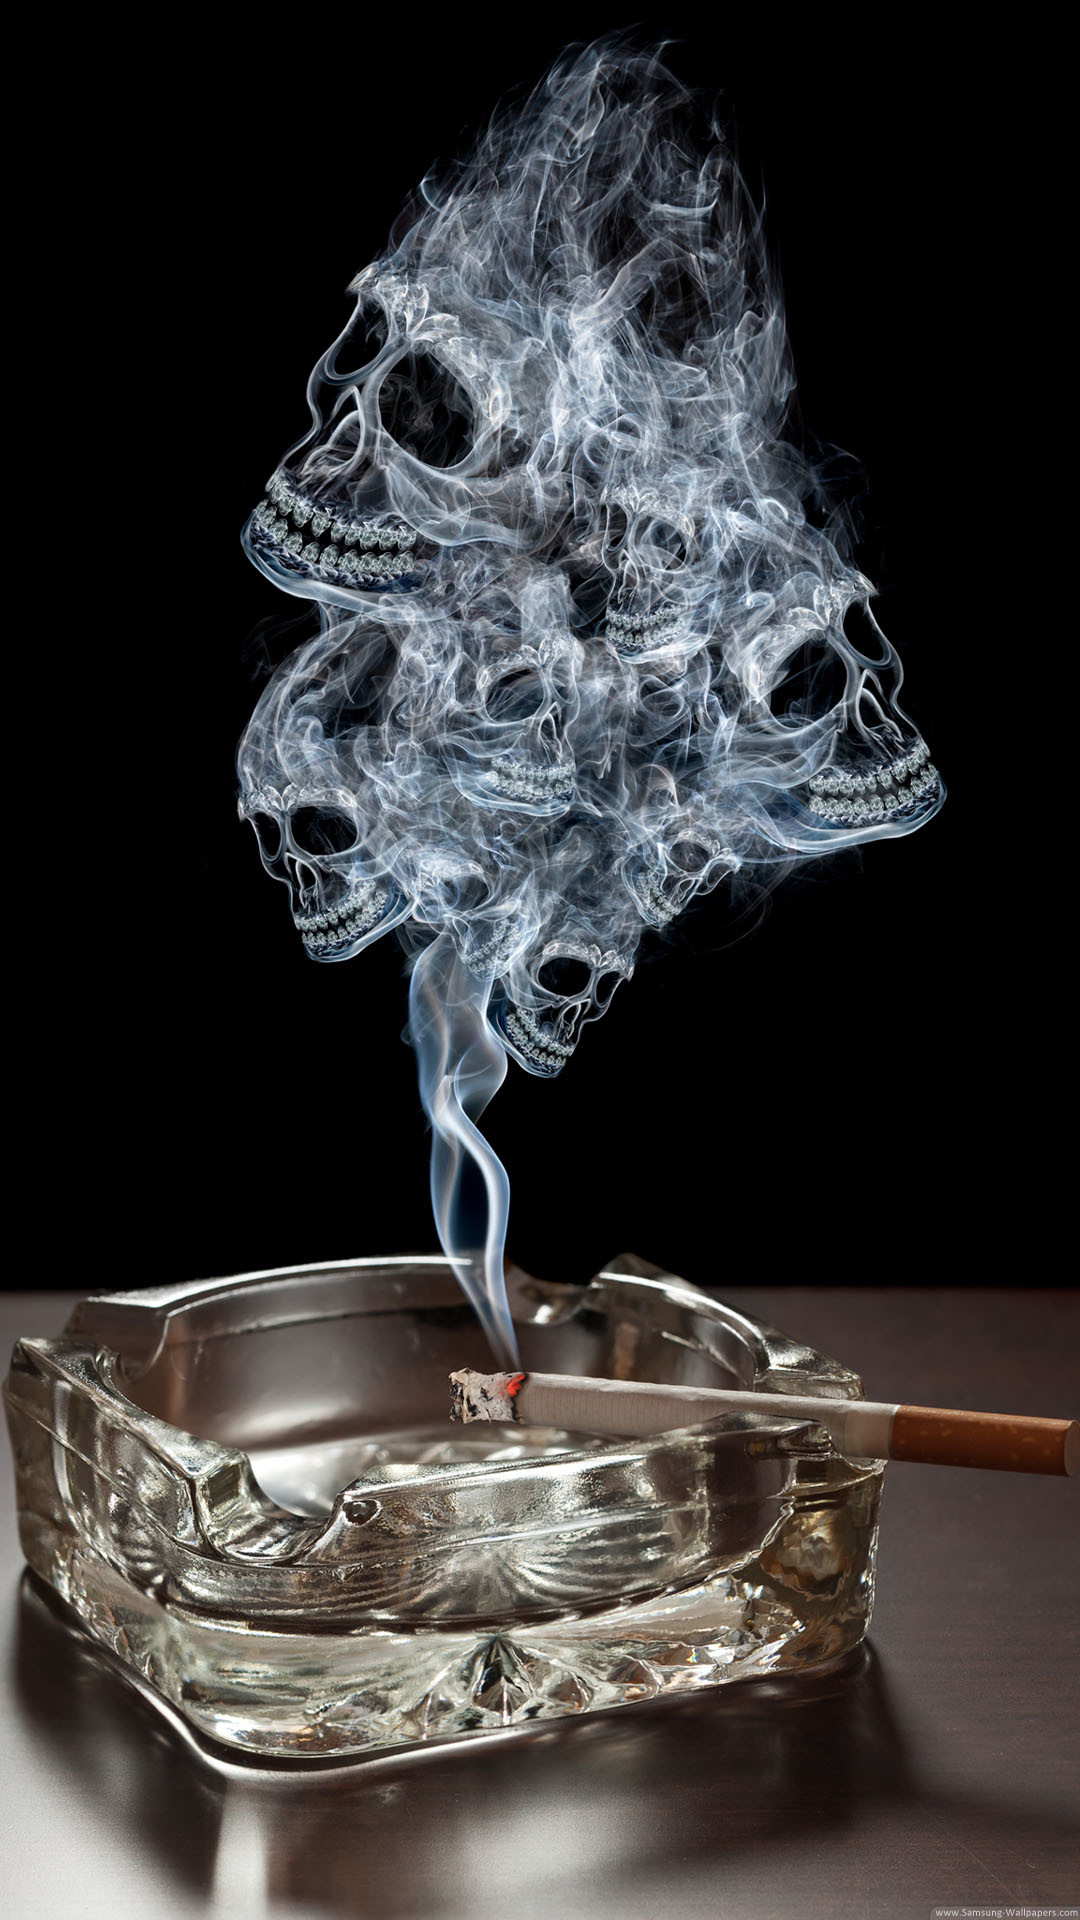 1080x1920 Smoke Skulls Ashtray Burning Cigarette iPhone 6 Plus HD Wallpaper